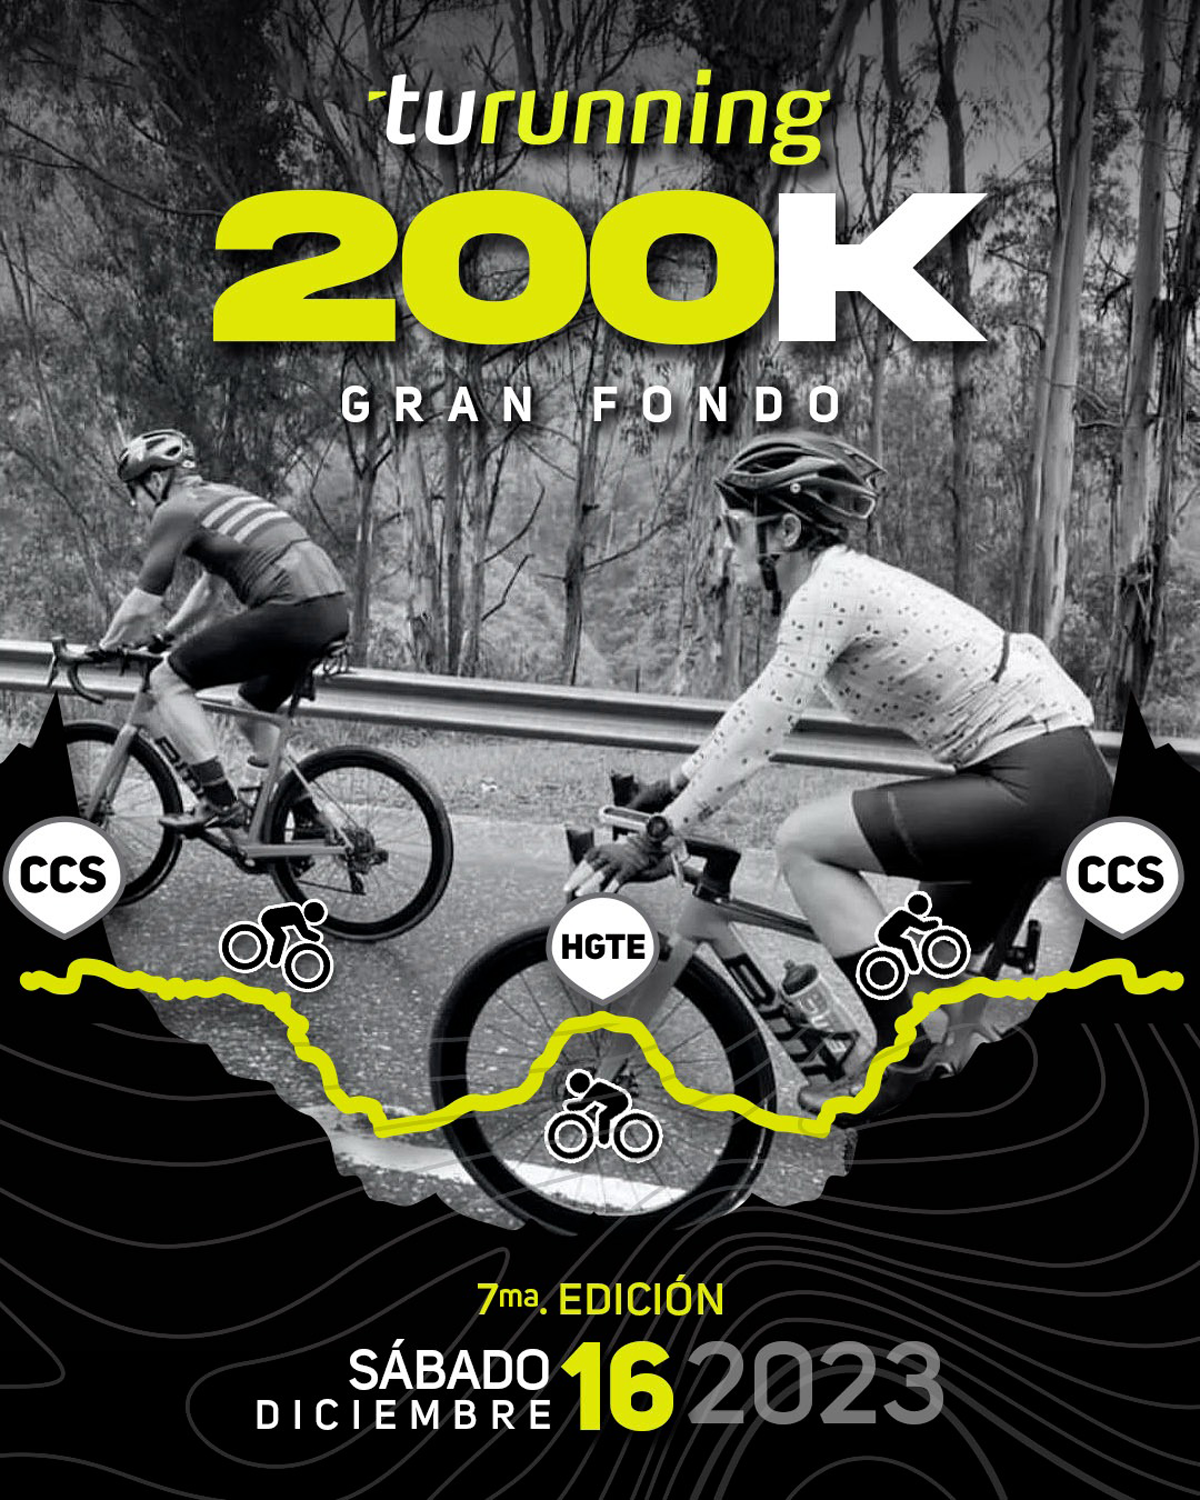 Gran Fondo 200K turunning ¡Pon a prueba tu resistencia!
Y suma a tu temporada 200 kilómetros
